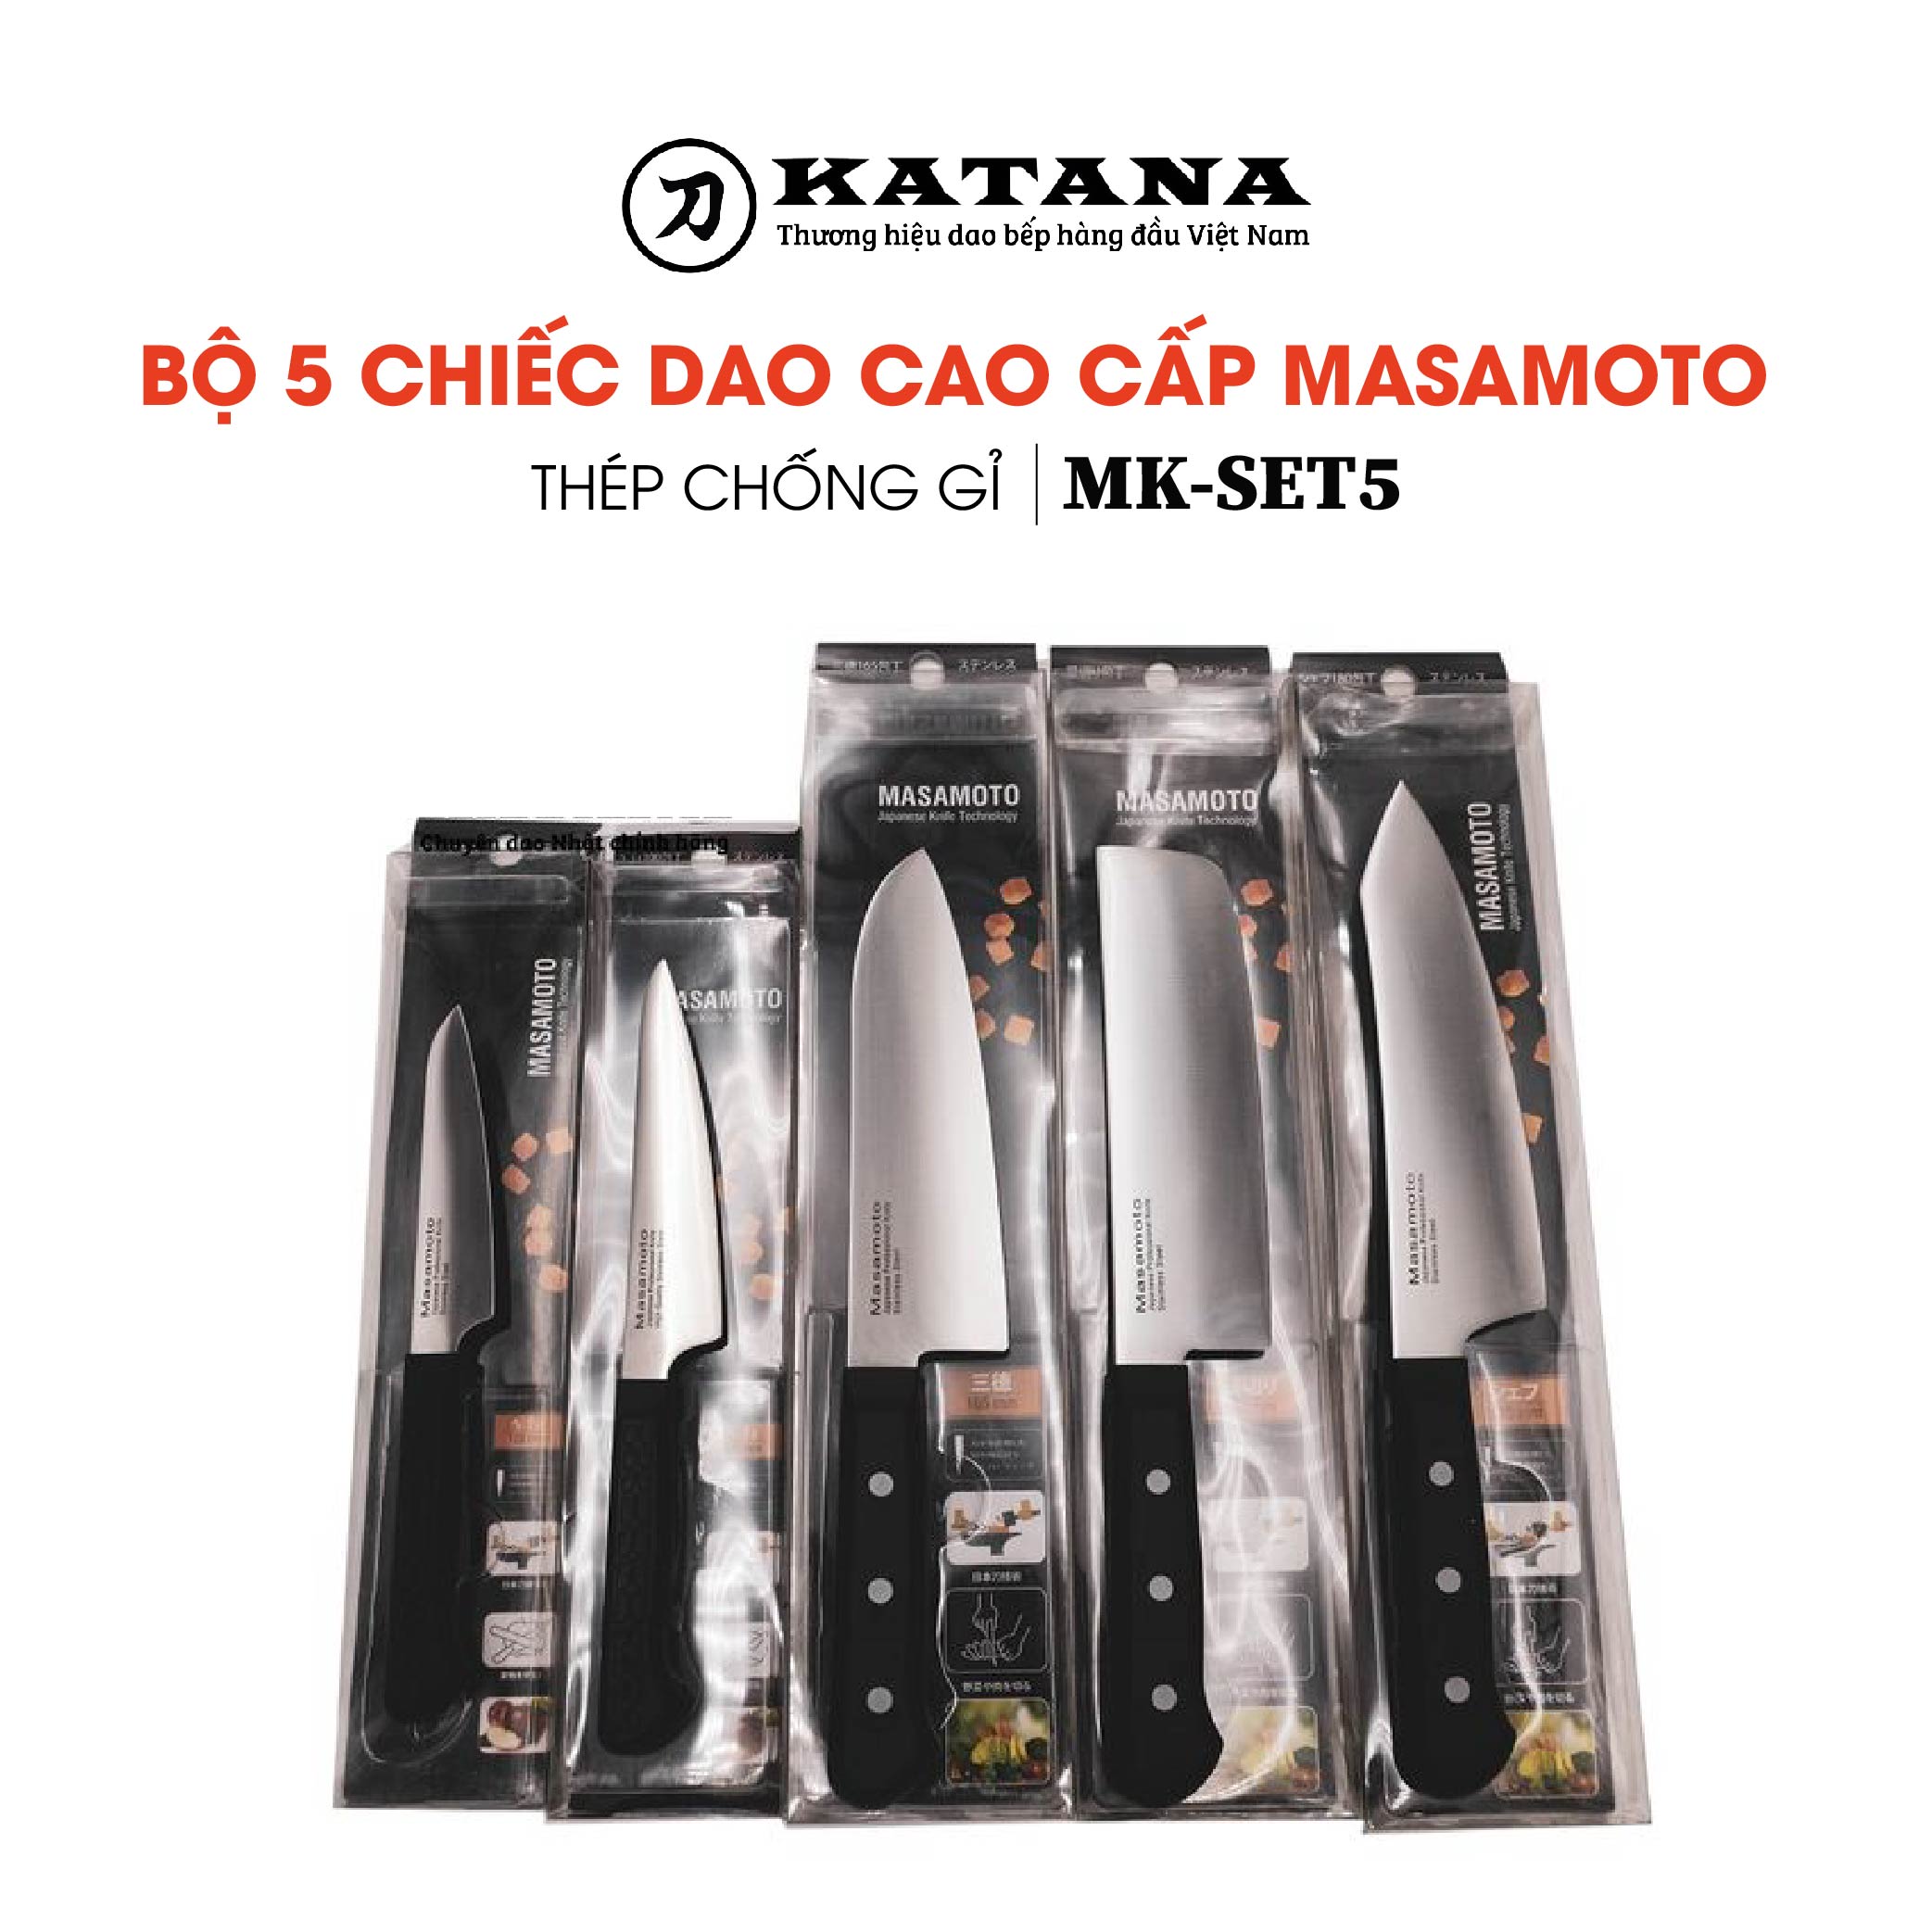 Bộ dao bếp 5 chiếc Masamoto cao cấp - Set 5 MKSET5